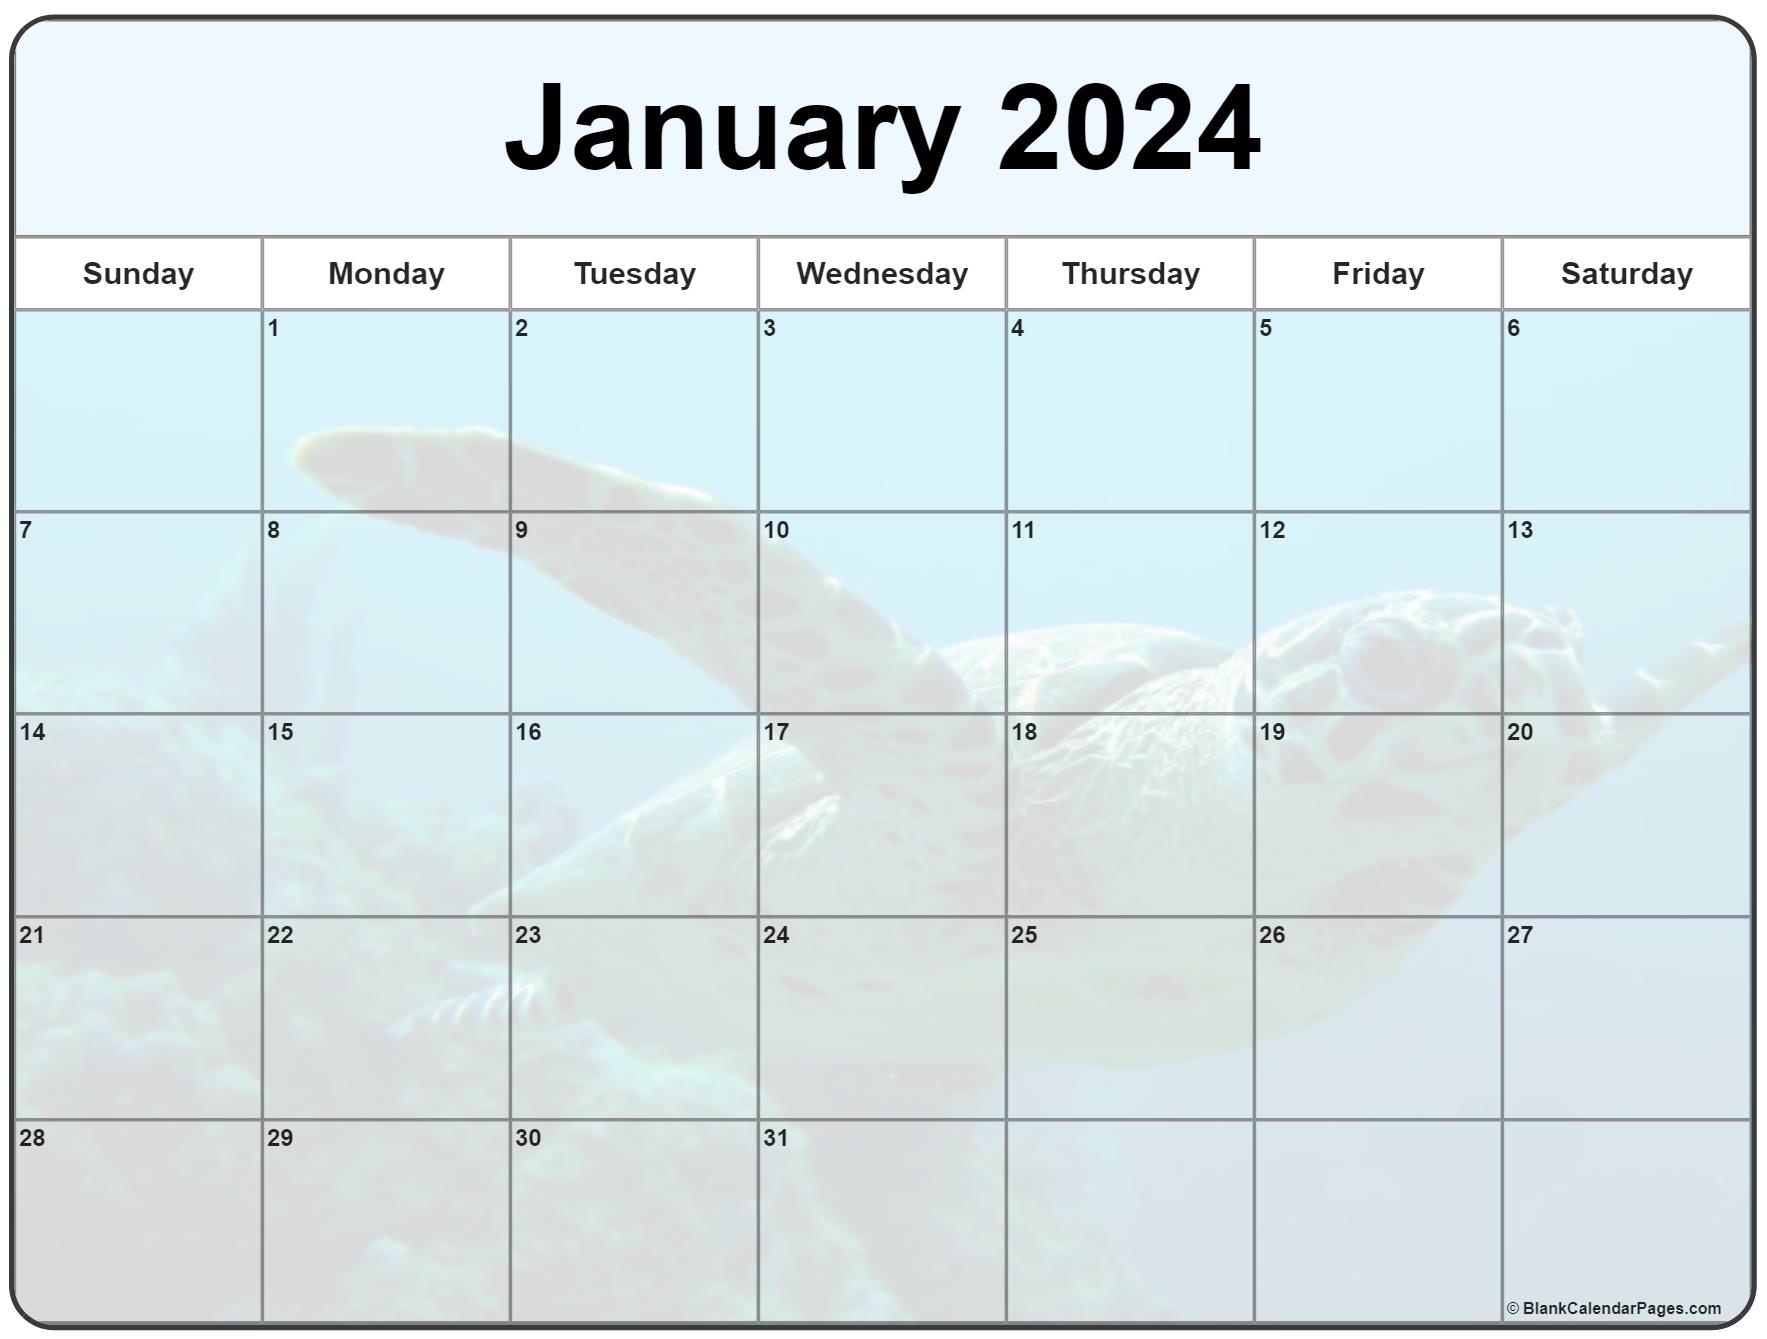 January 2024 Calendar Festival Cool Amazing List of Calendar January 2024